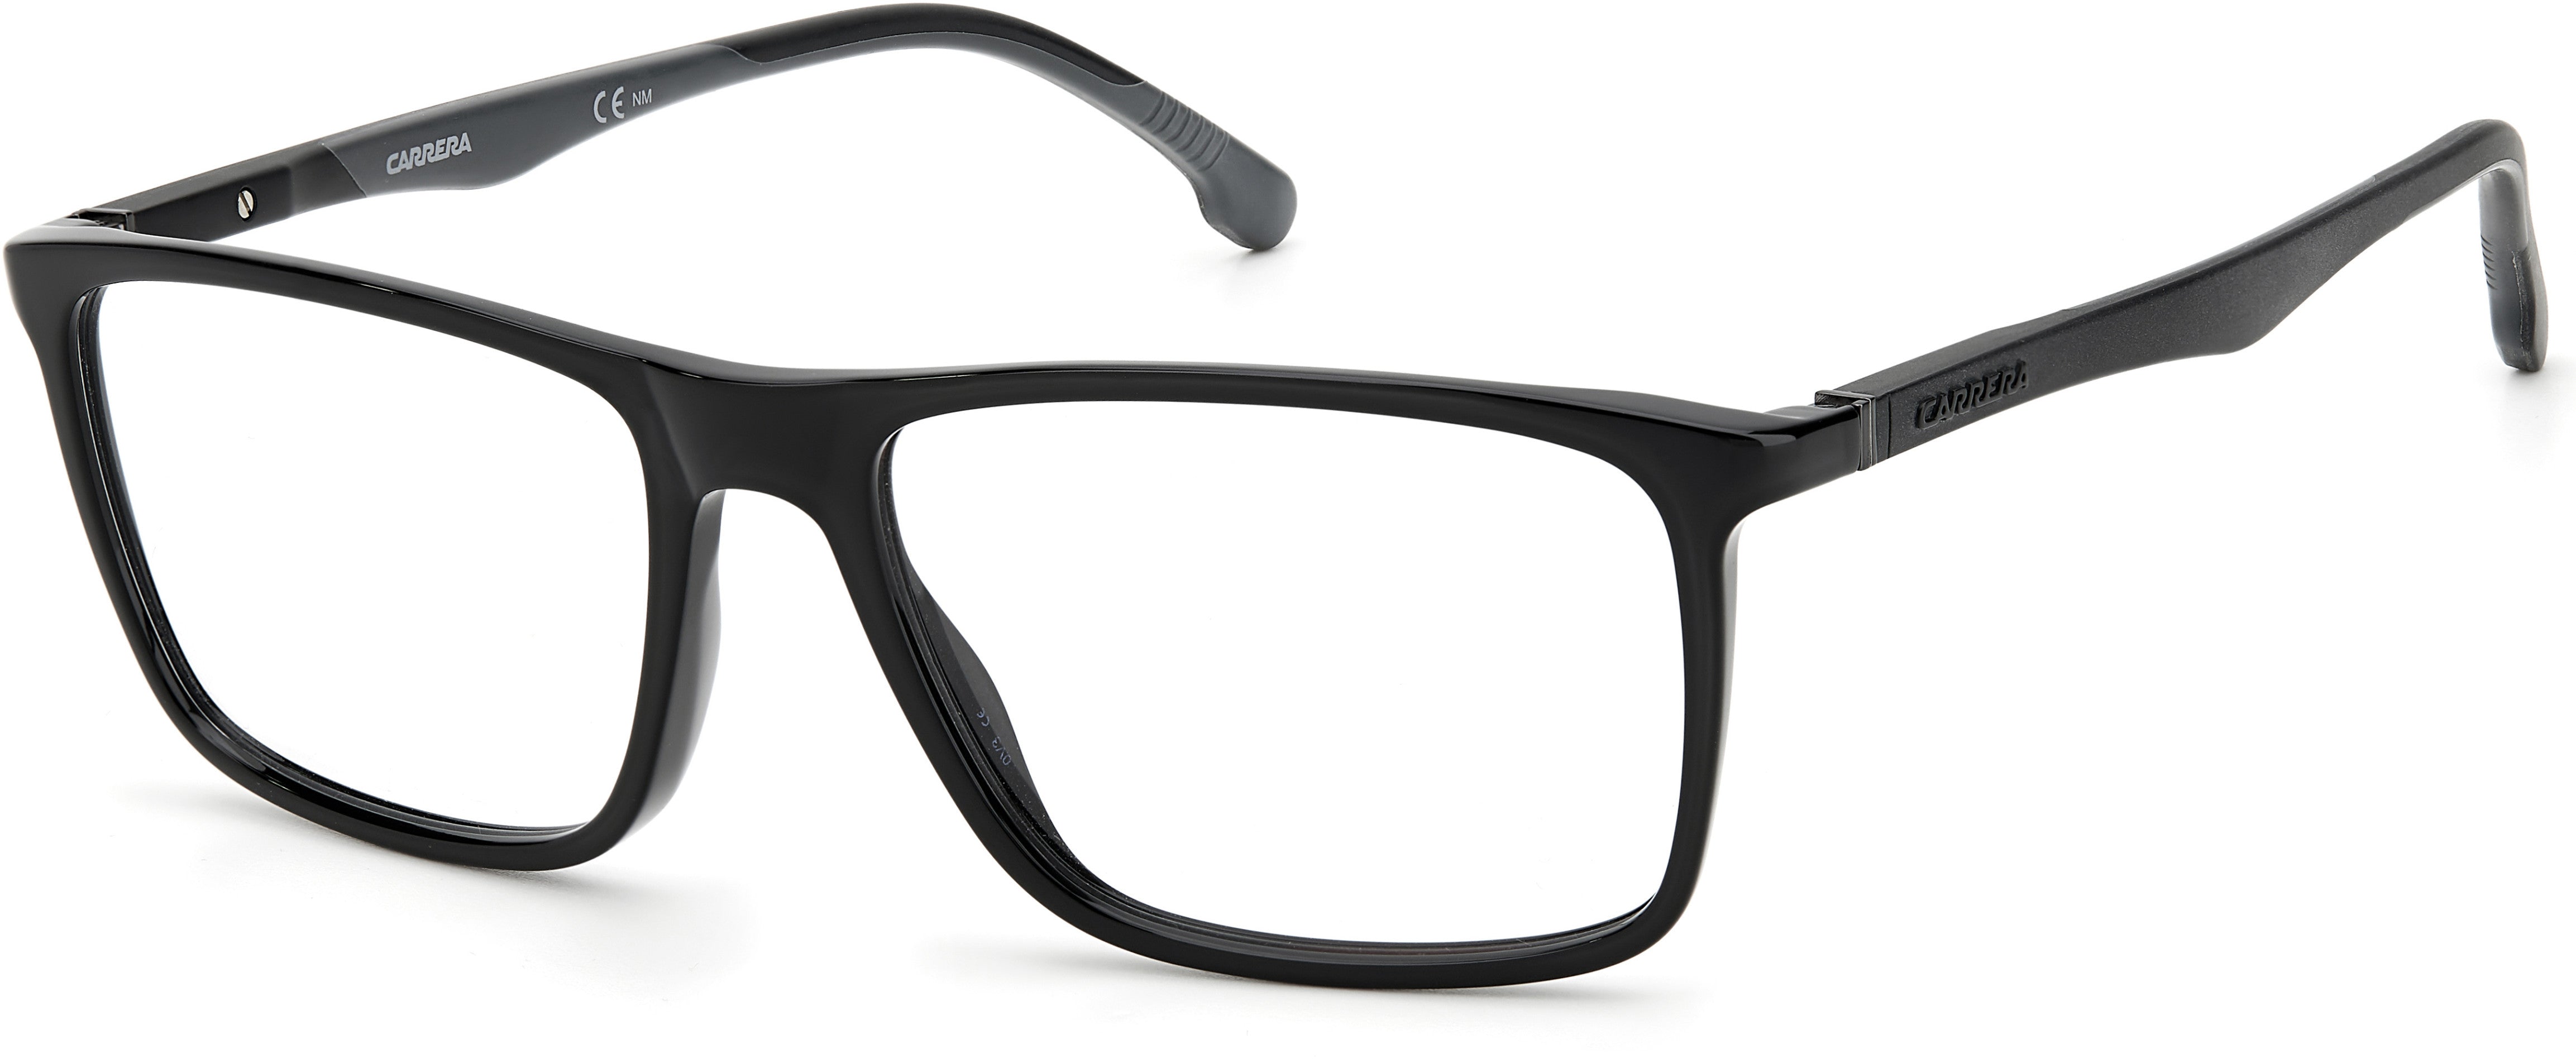  Carrera 8862 Rectangular Eyeglasses 0807-0807  Black (00 Demo Lens)